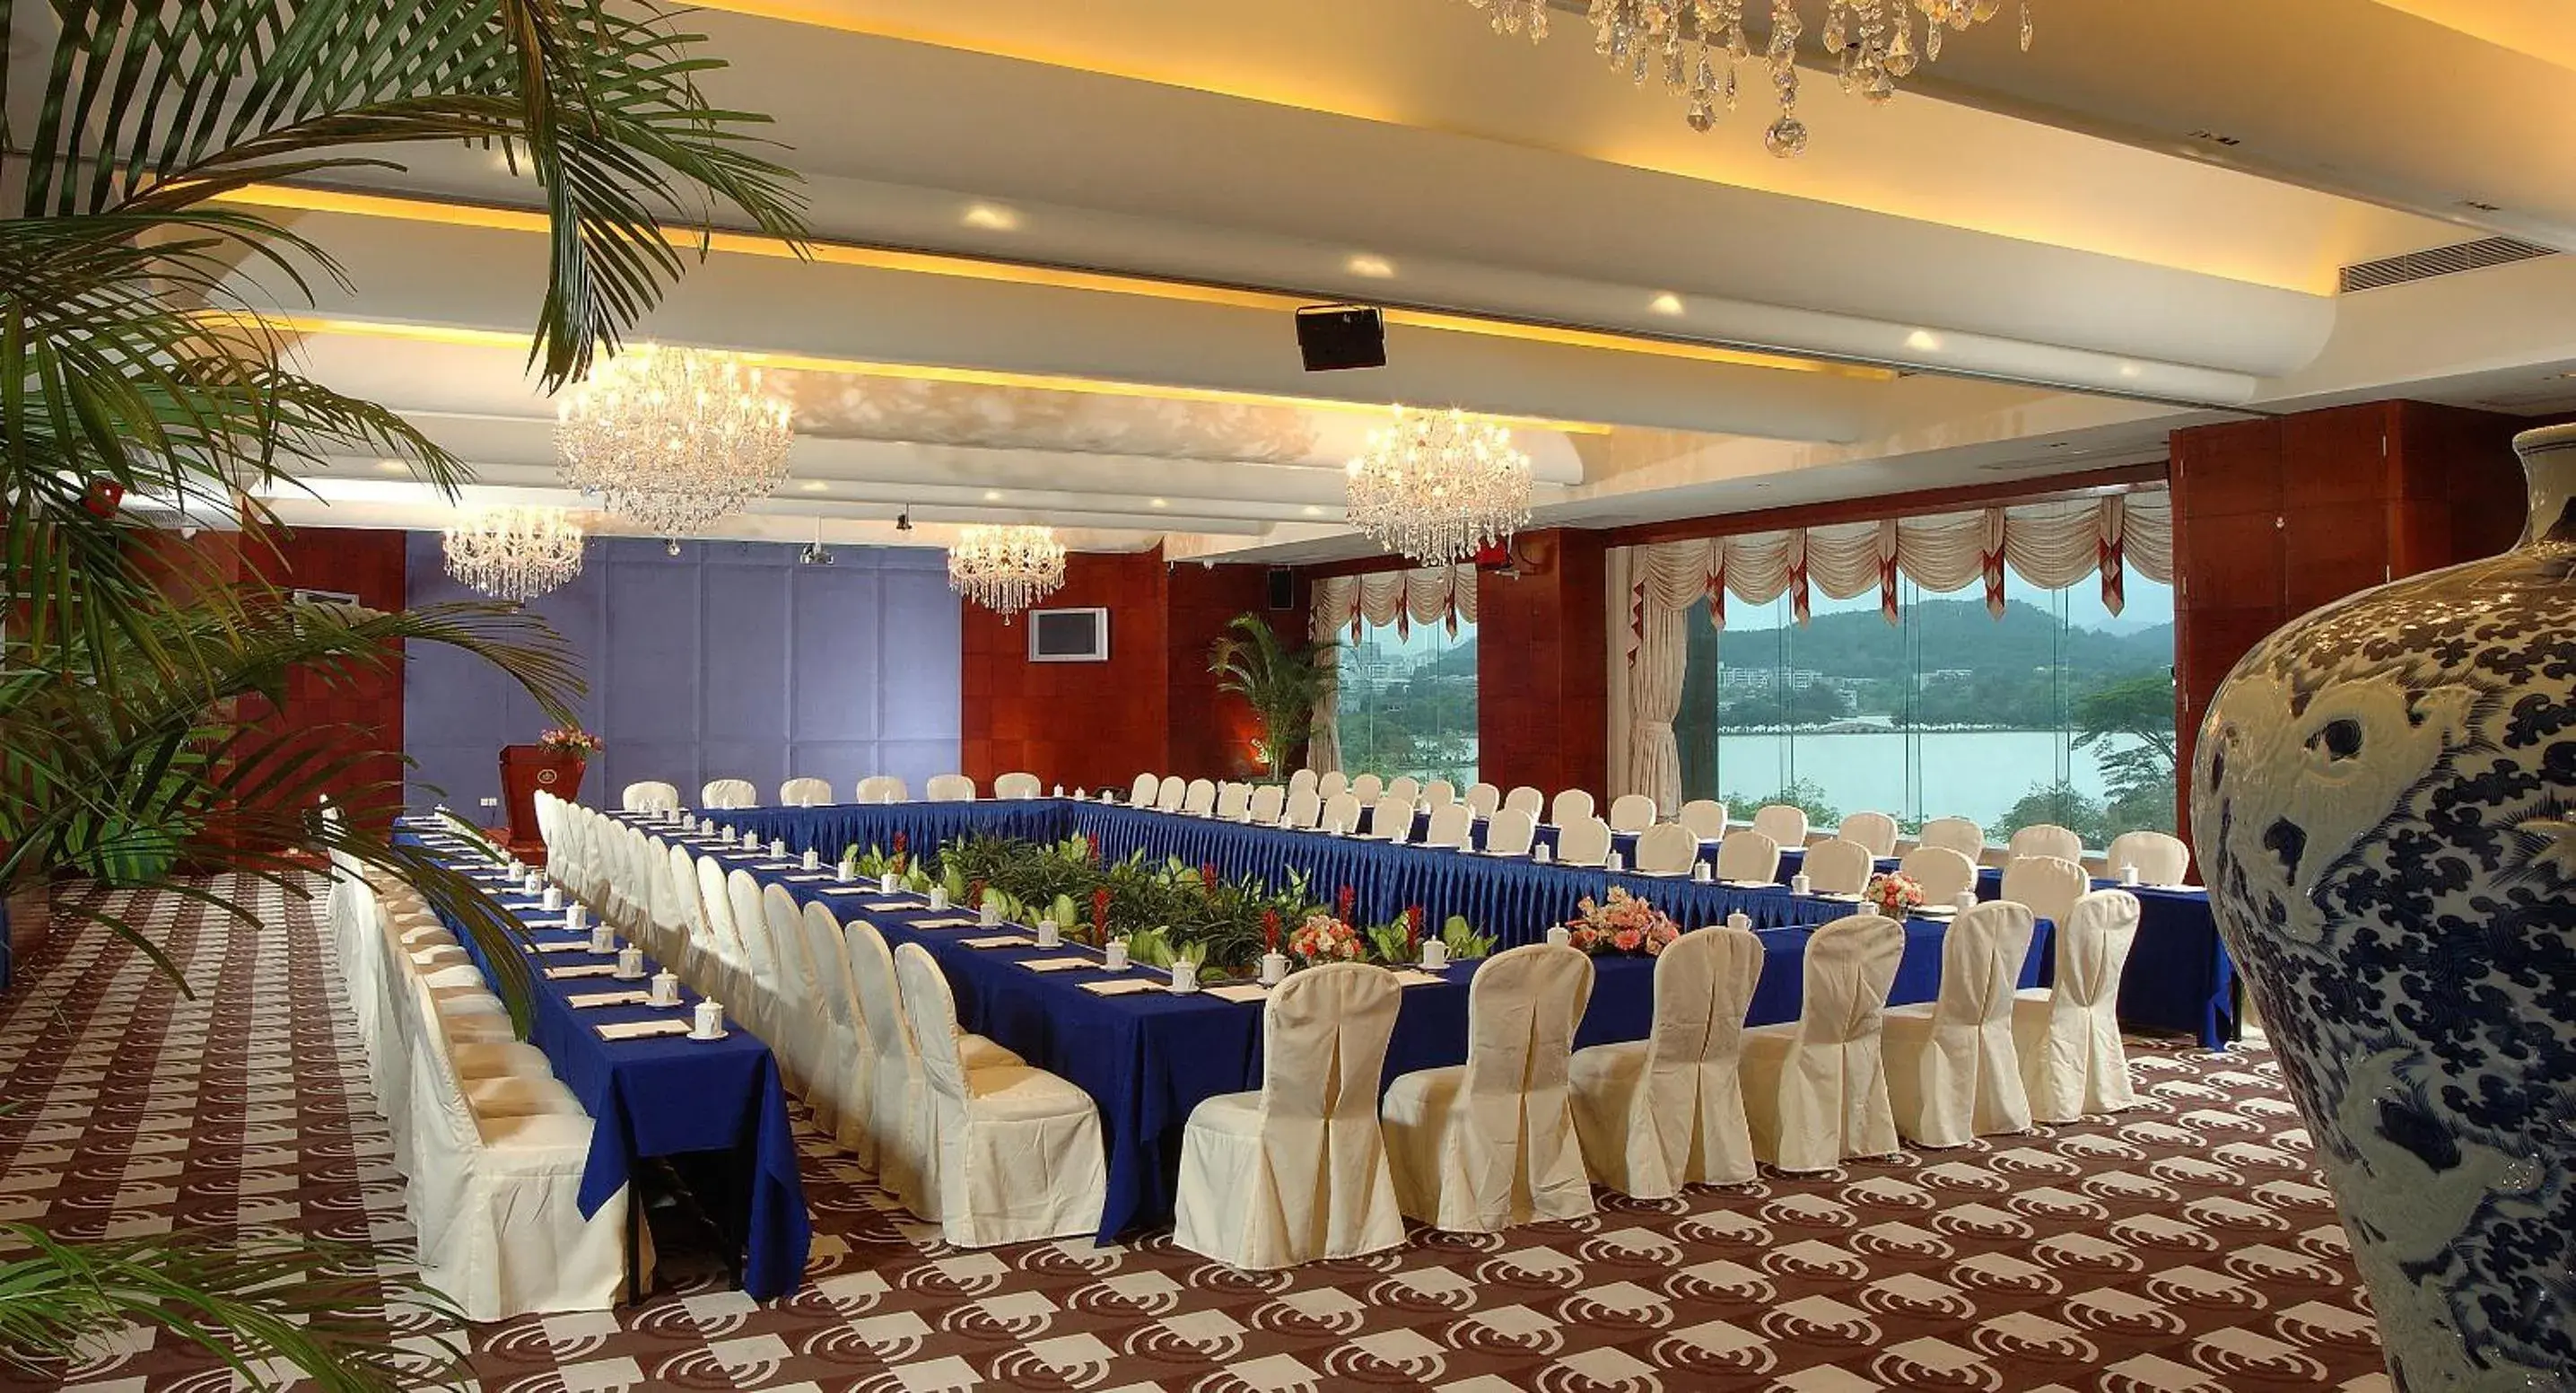 Business facilities, Banquet Facilities in Huizhou Kande International Hotel